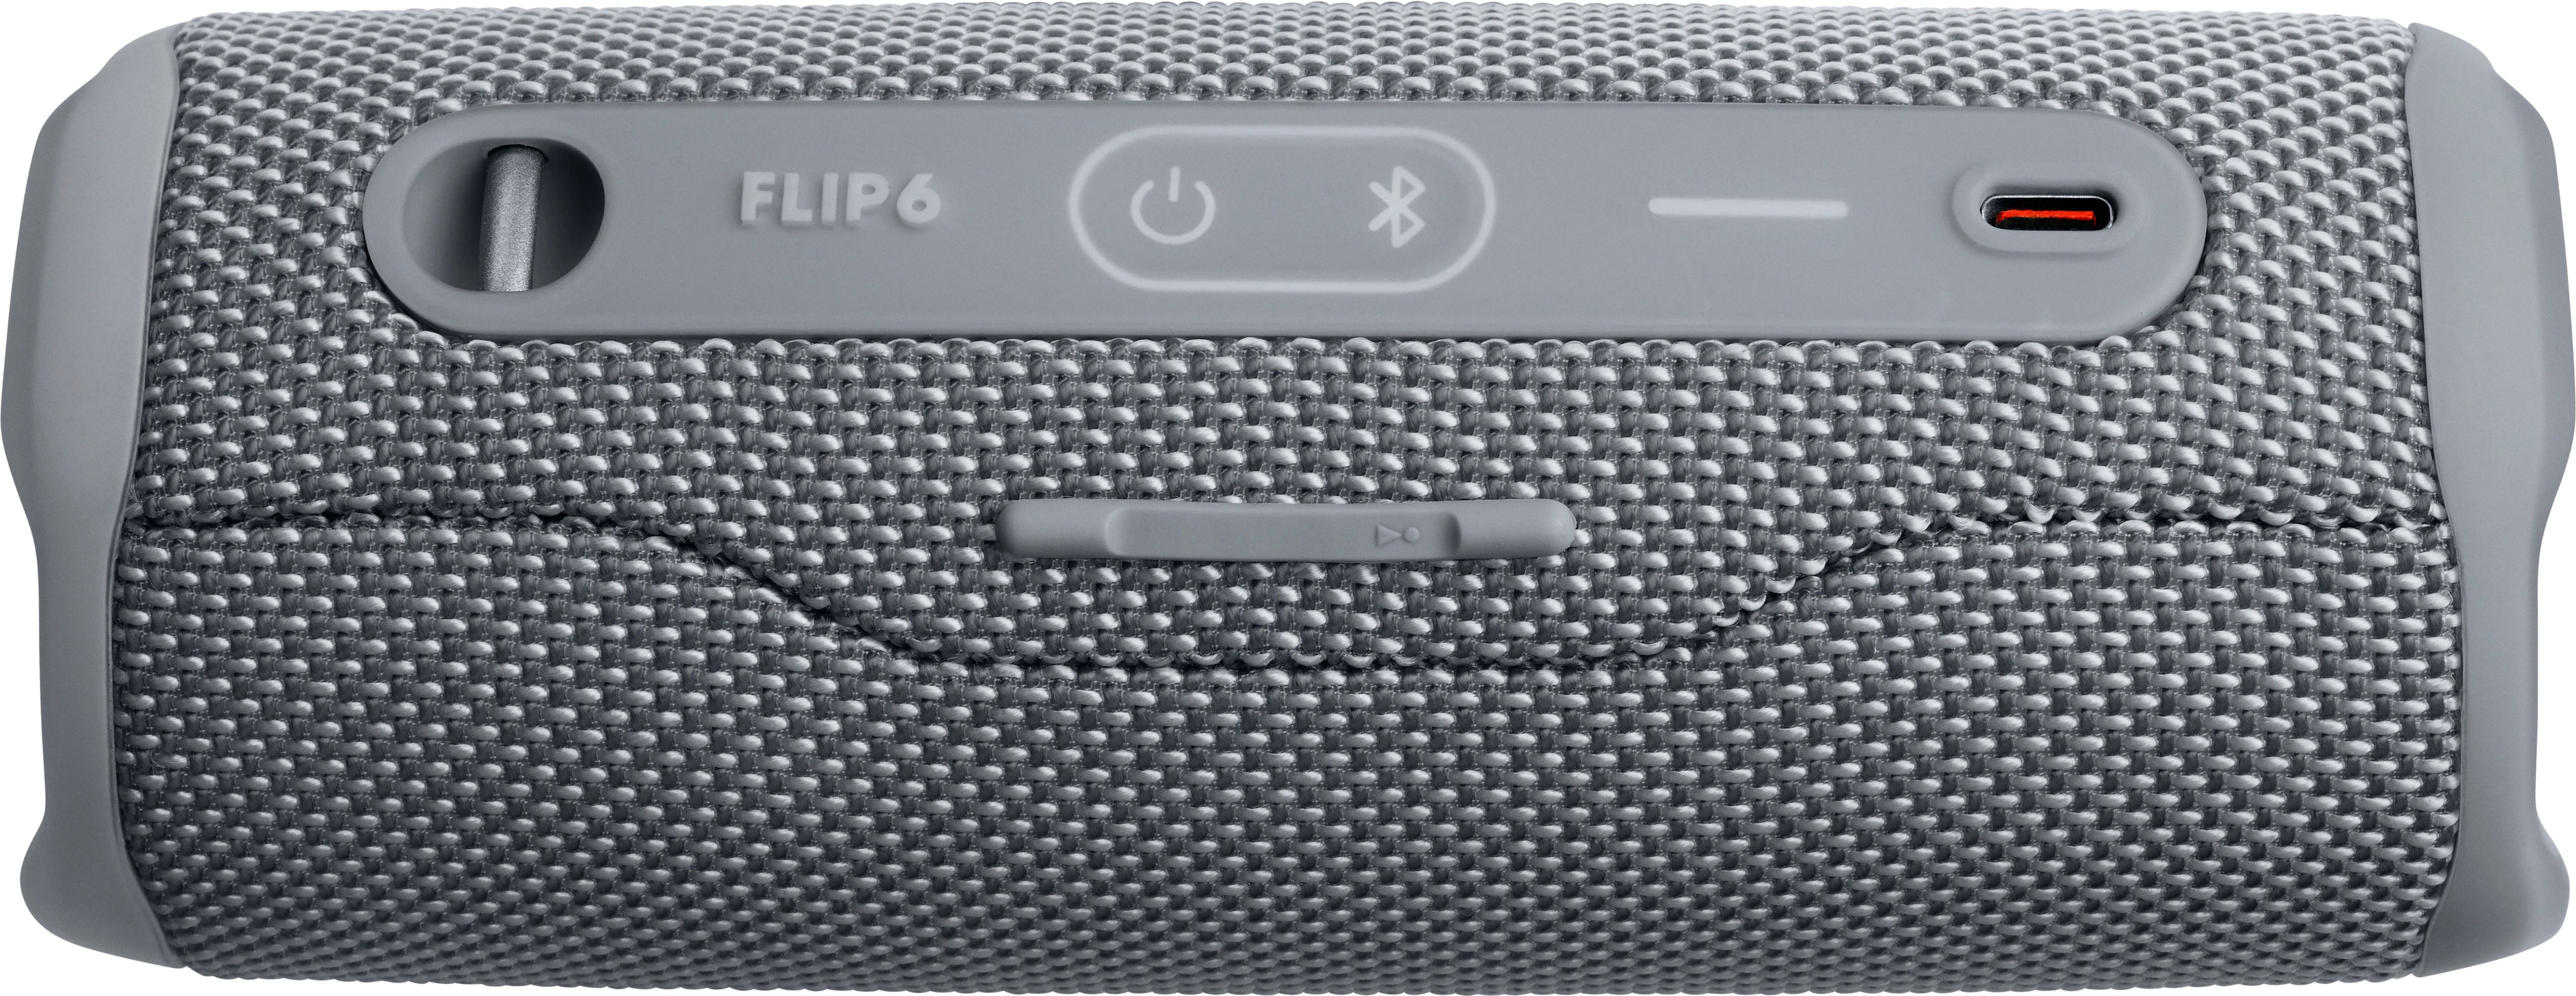 JBL Flip 6 Waterproof Bluetooth Speaker - Grey